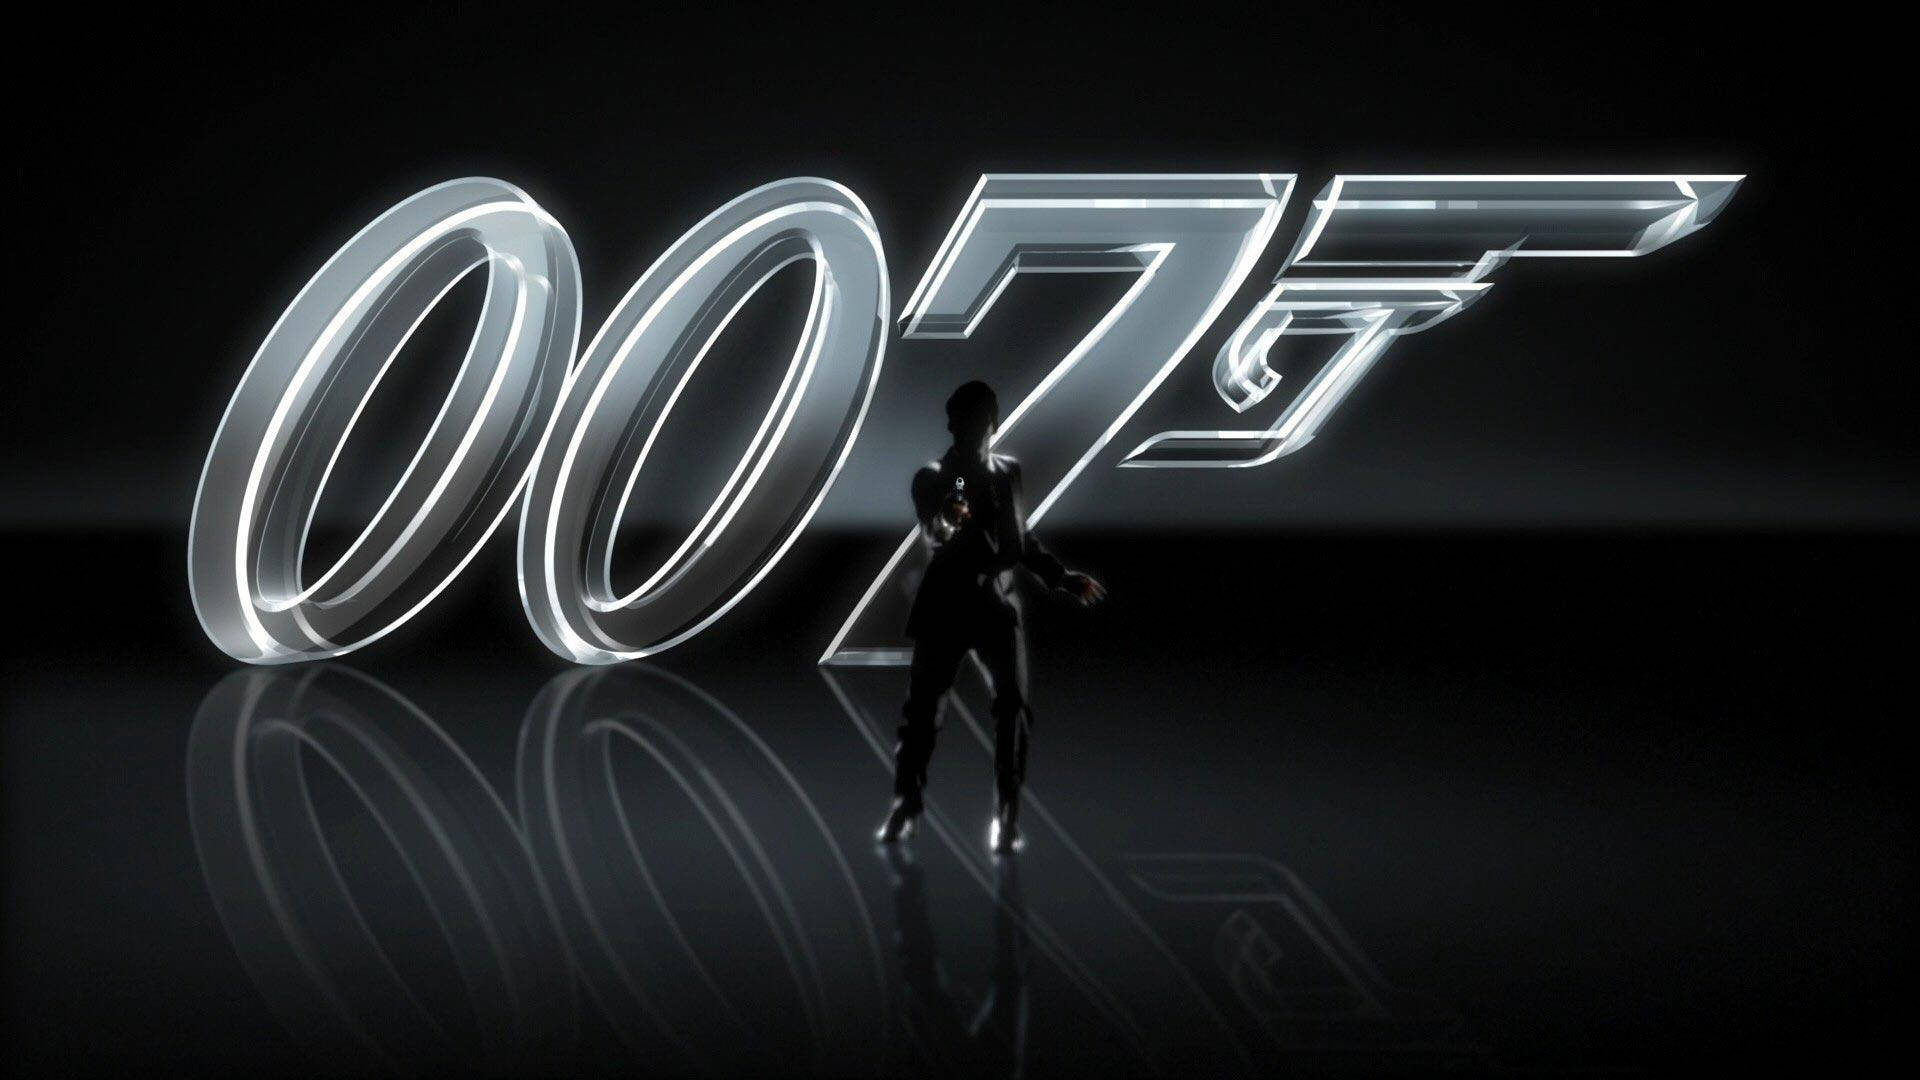 James Bond 007 Film Background